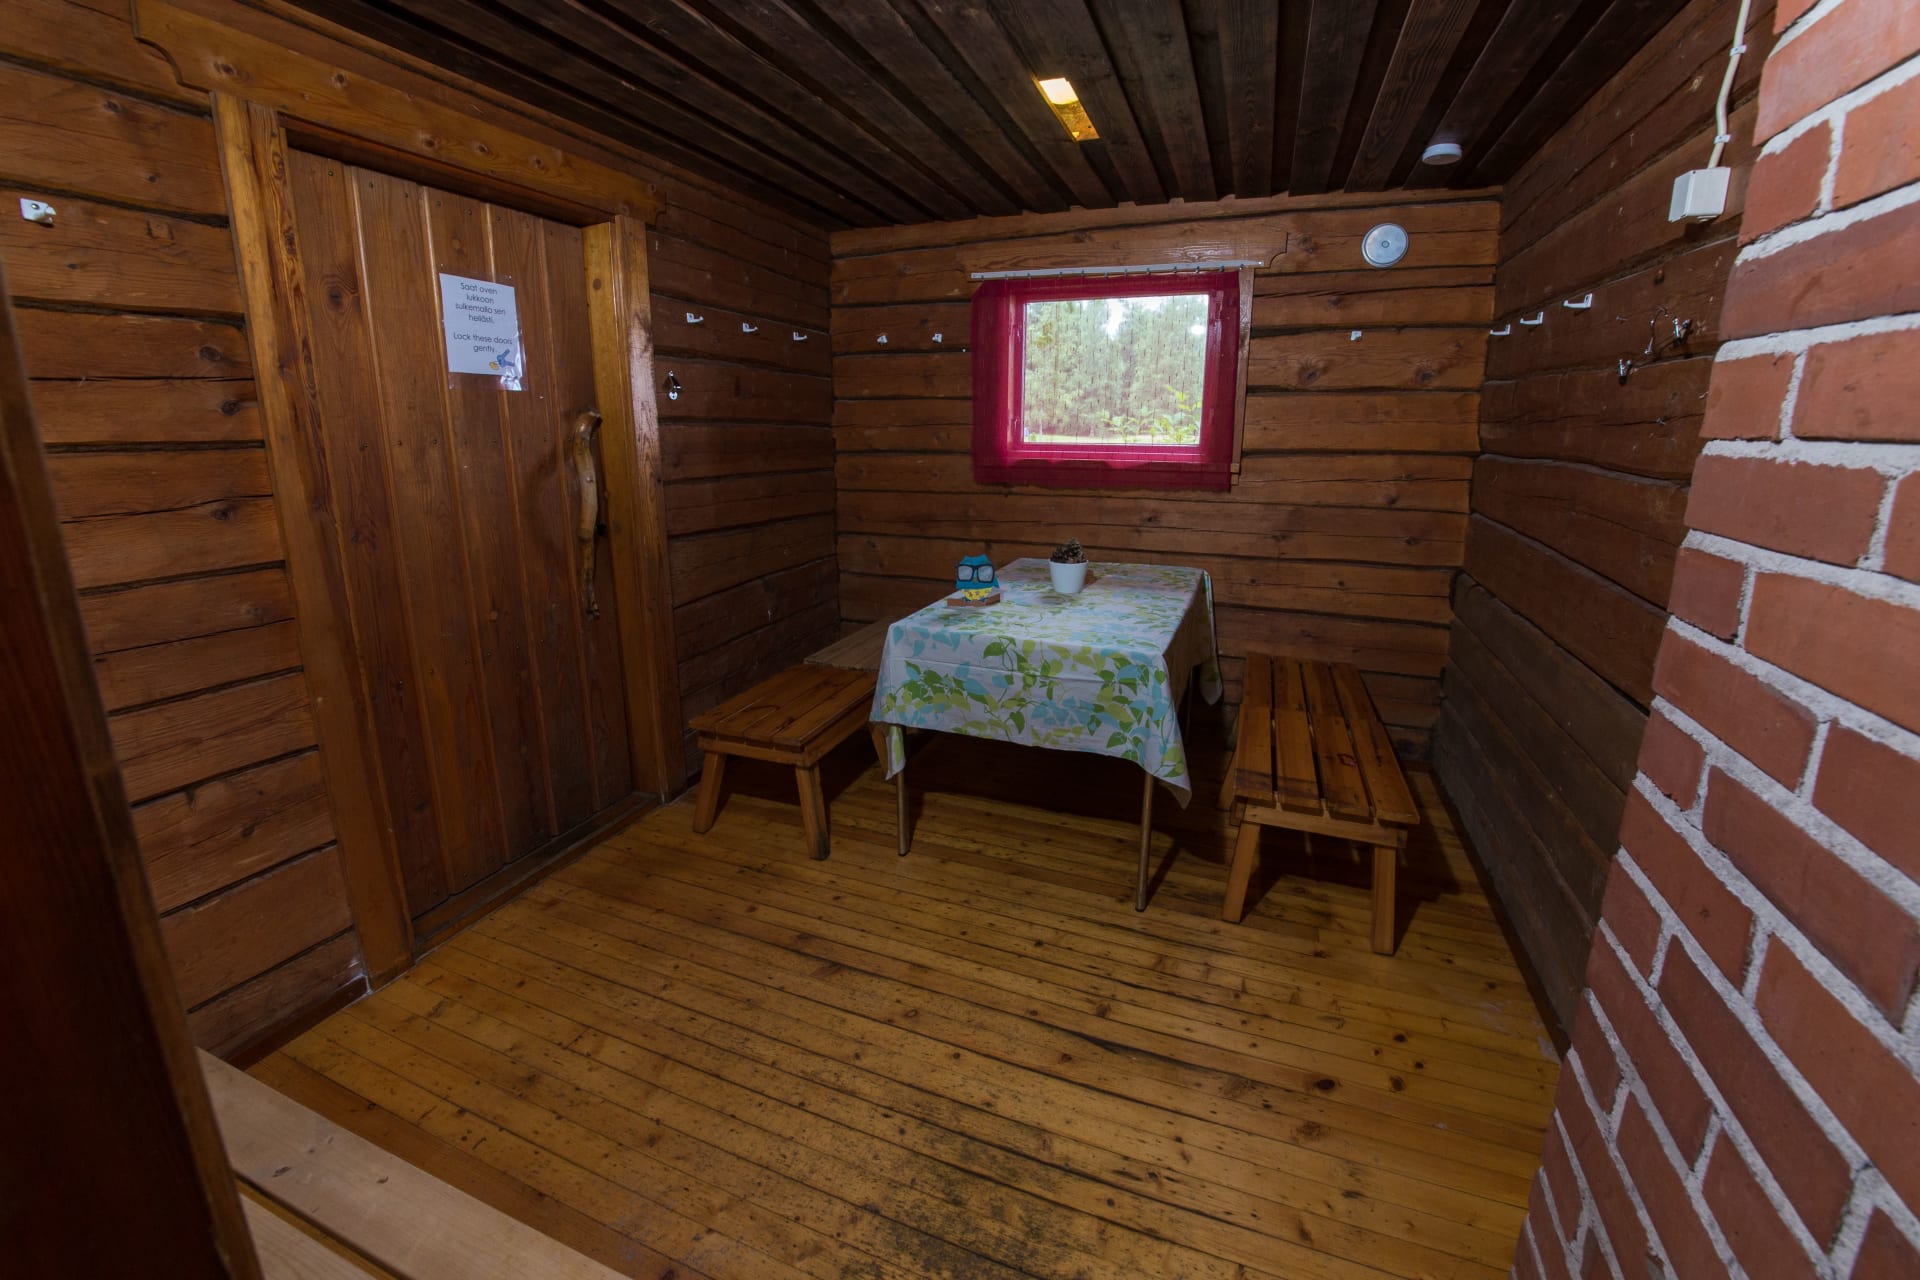 Dressing room of the sauna